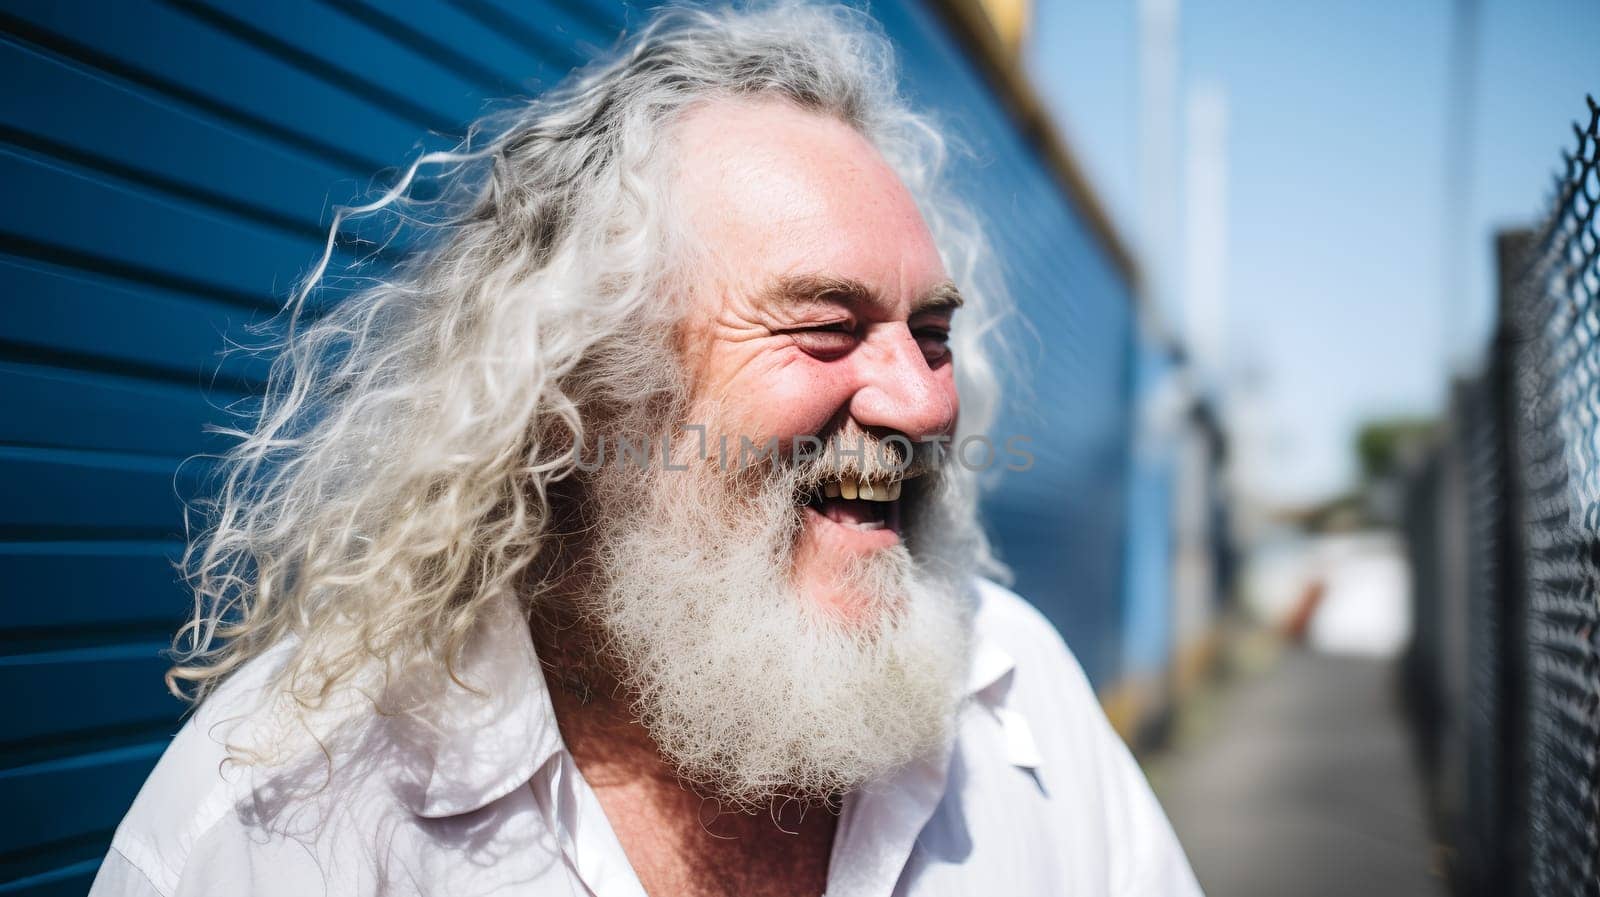 Elderly man with white beard laughing heartily in sunlight by chrisroll